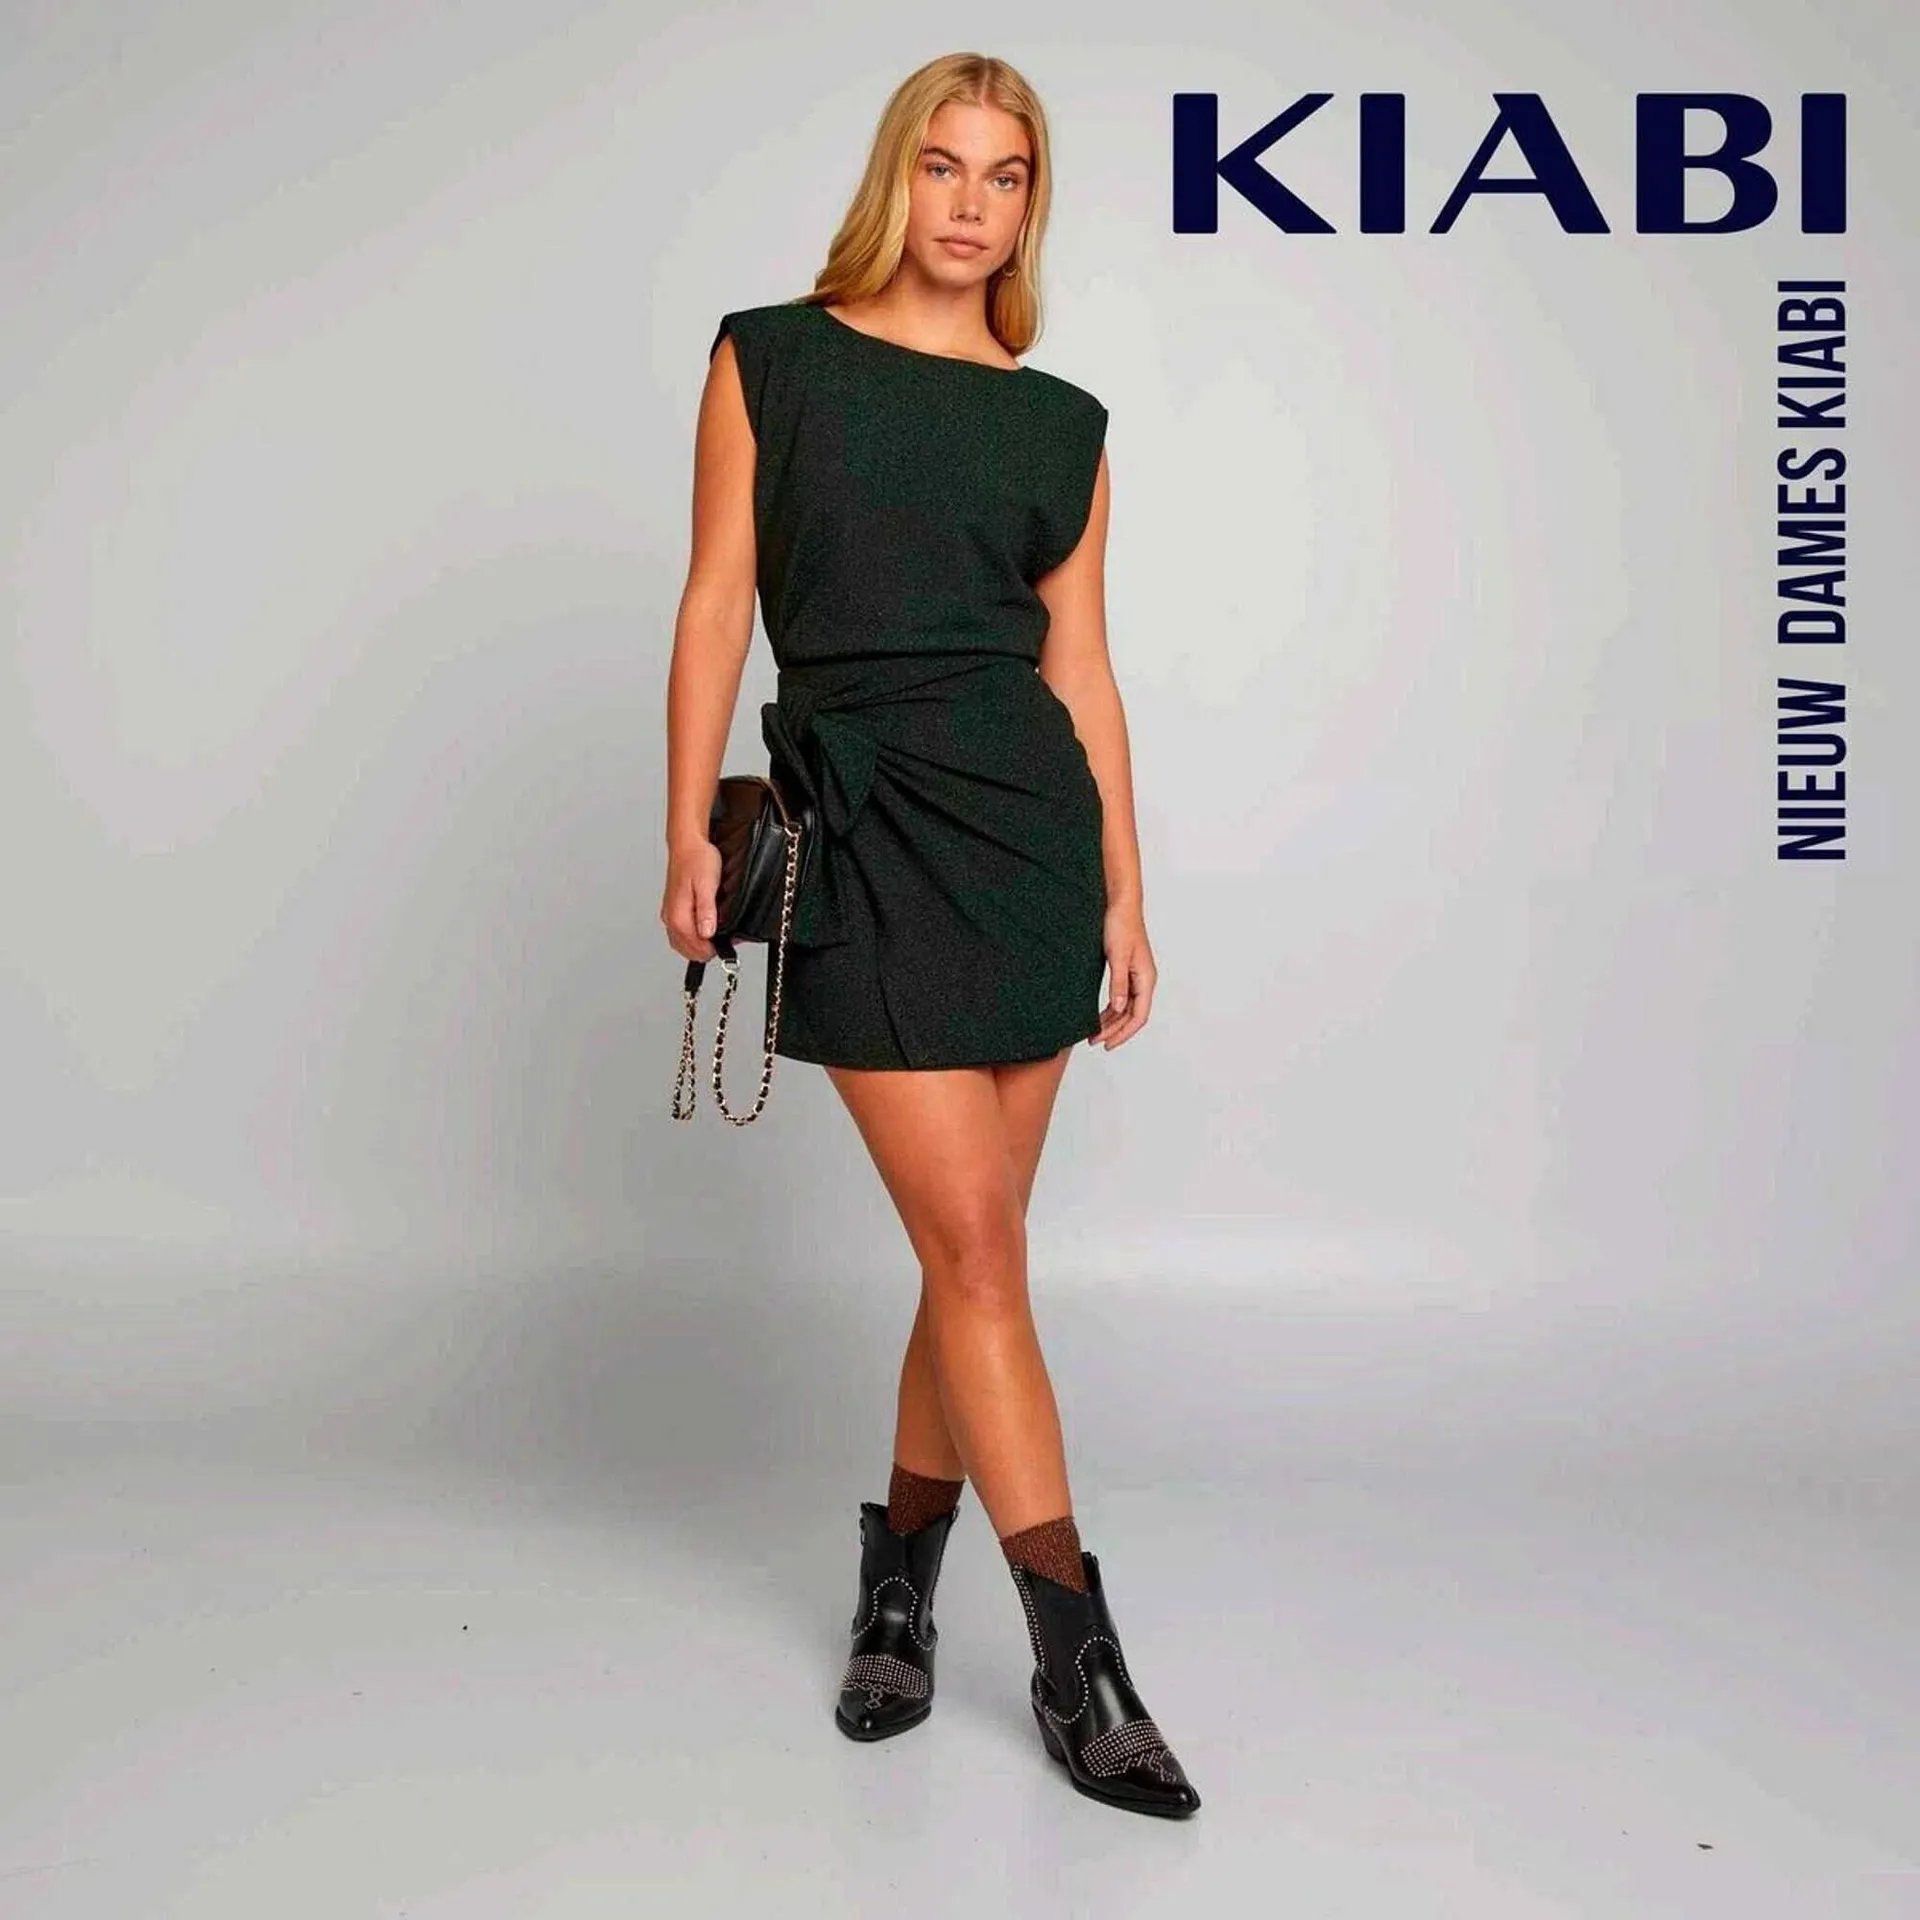 Kiabi folder - 1